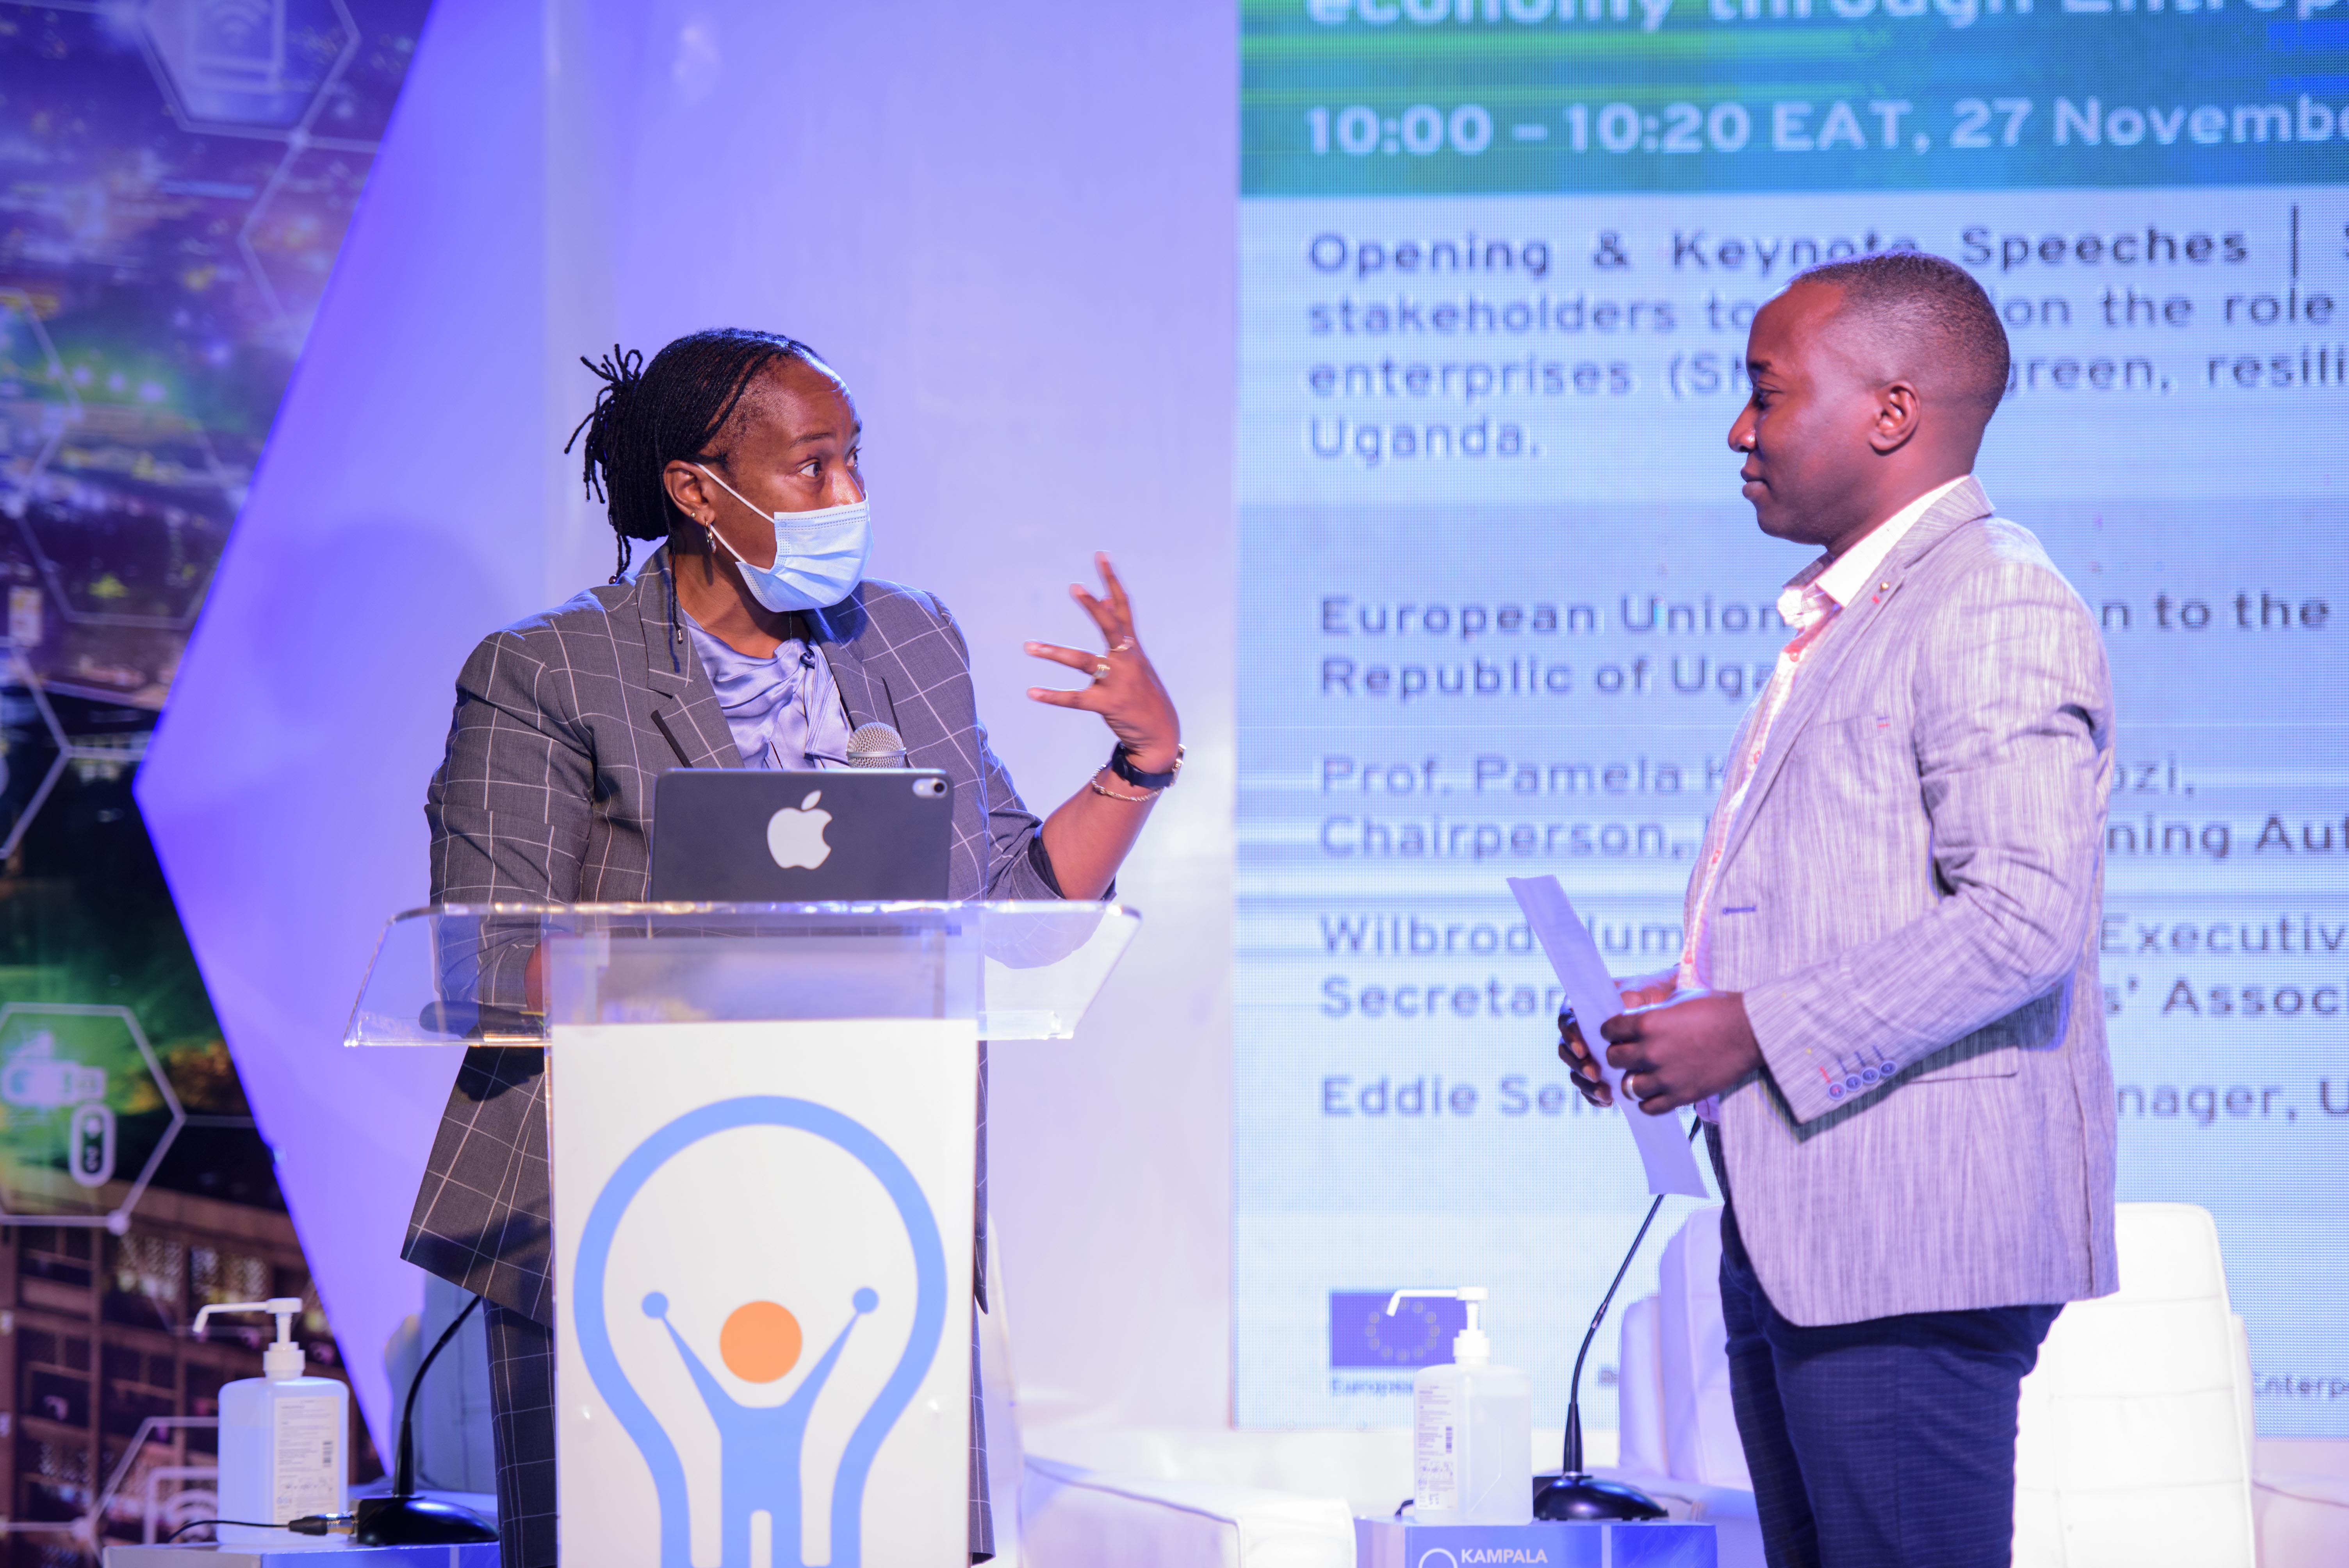 UGEFA Green Entrepreneurship Day | Kampala Innovation Week 2020